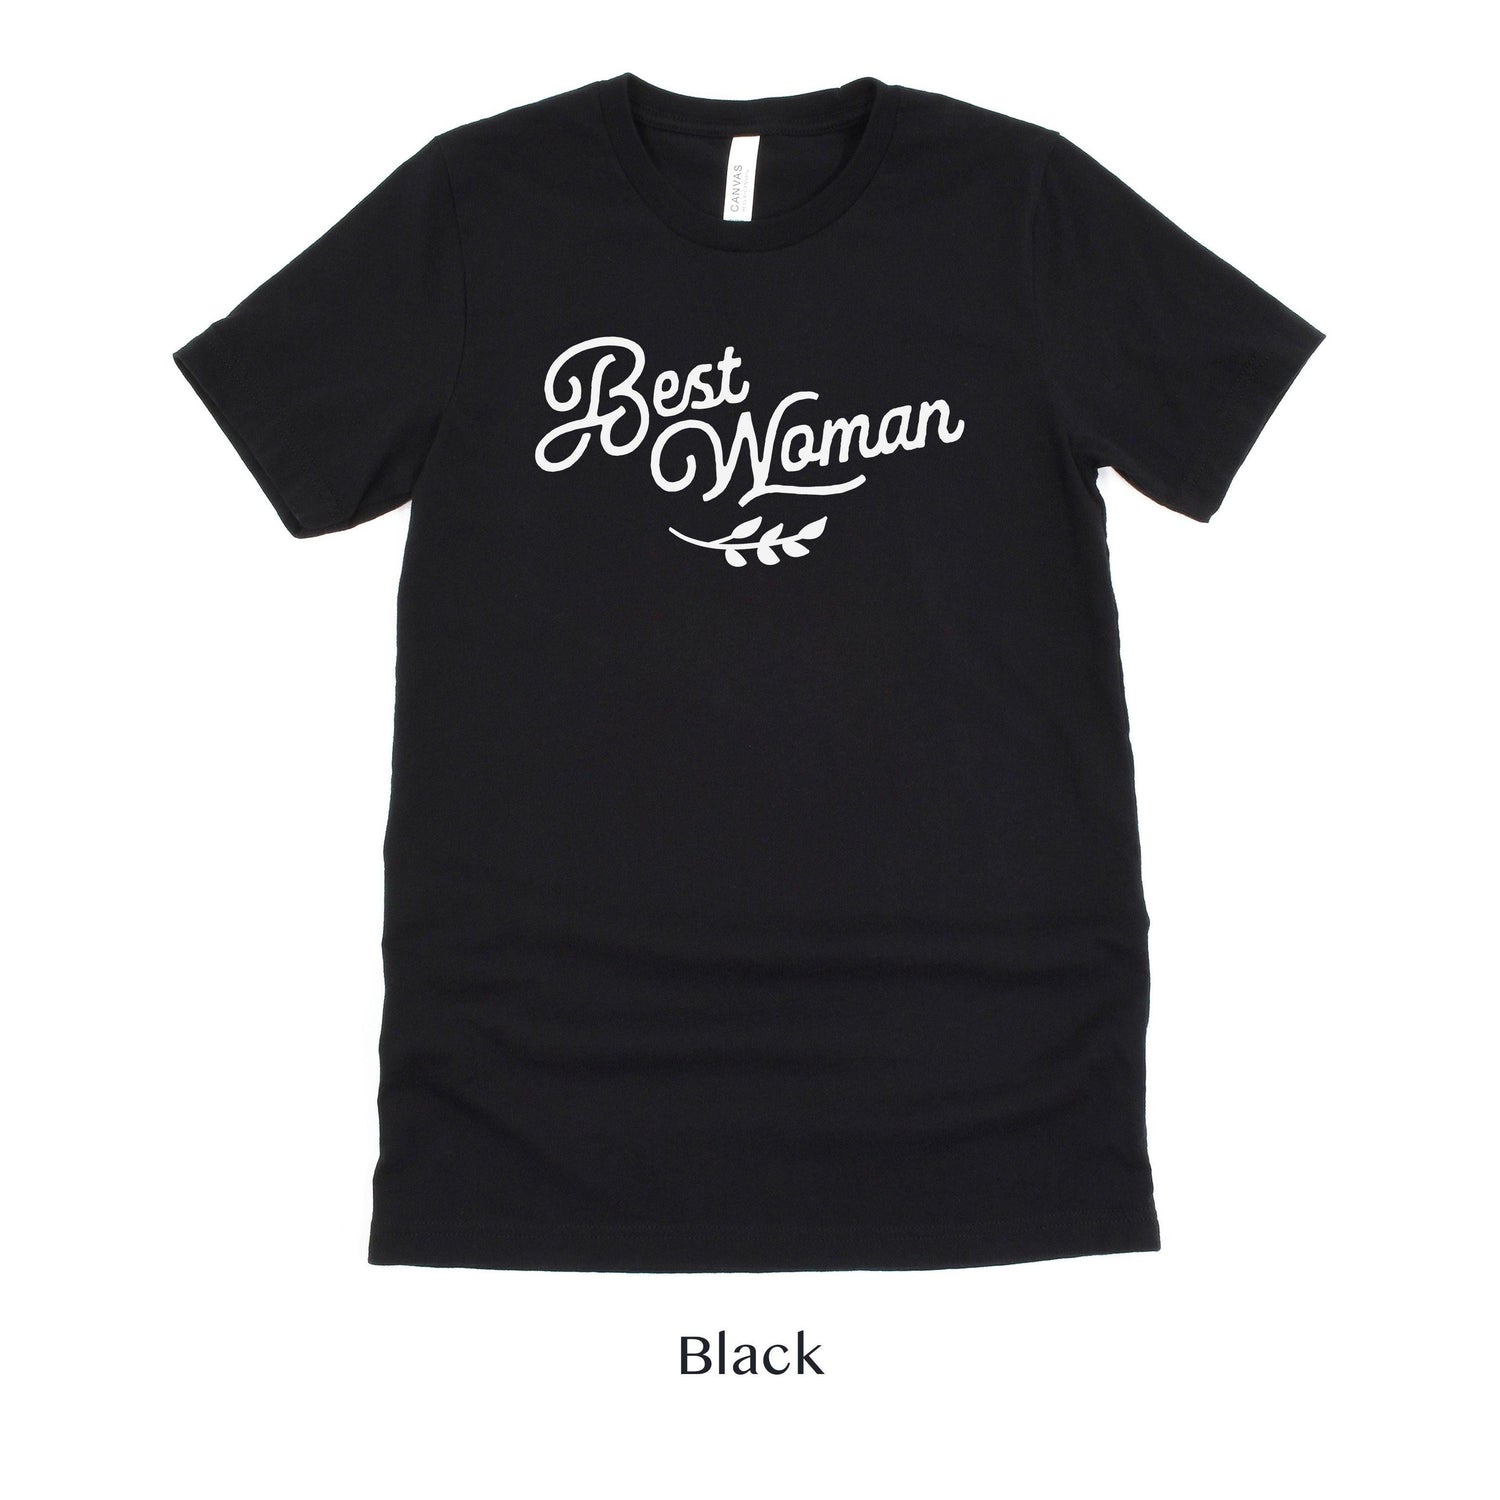 Best Woman Short-Sleeve Tee - Plus Sizes Available by Oaklynn Lane - black bridesmaid shirt